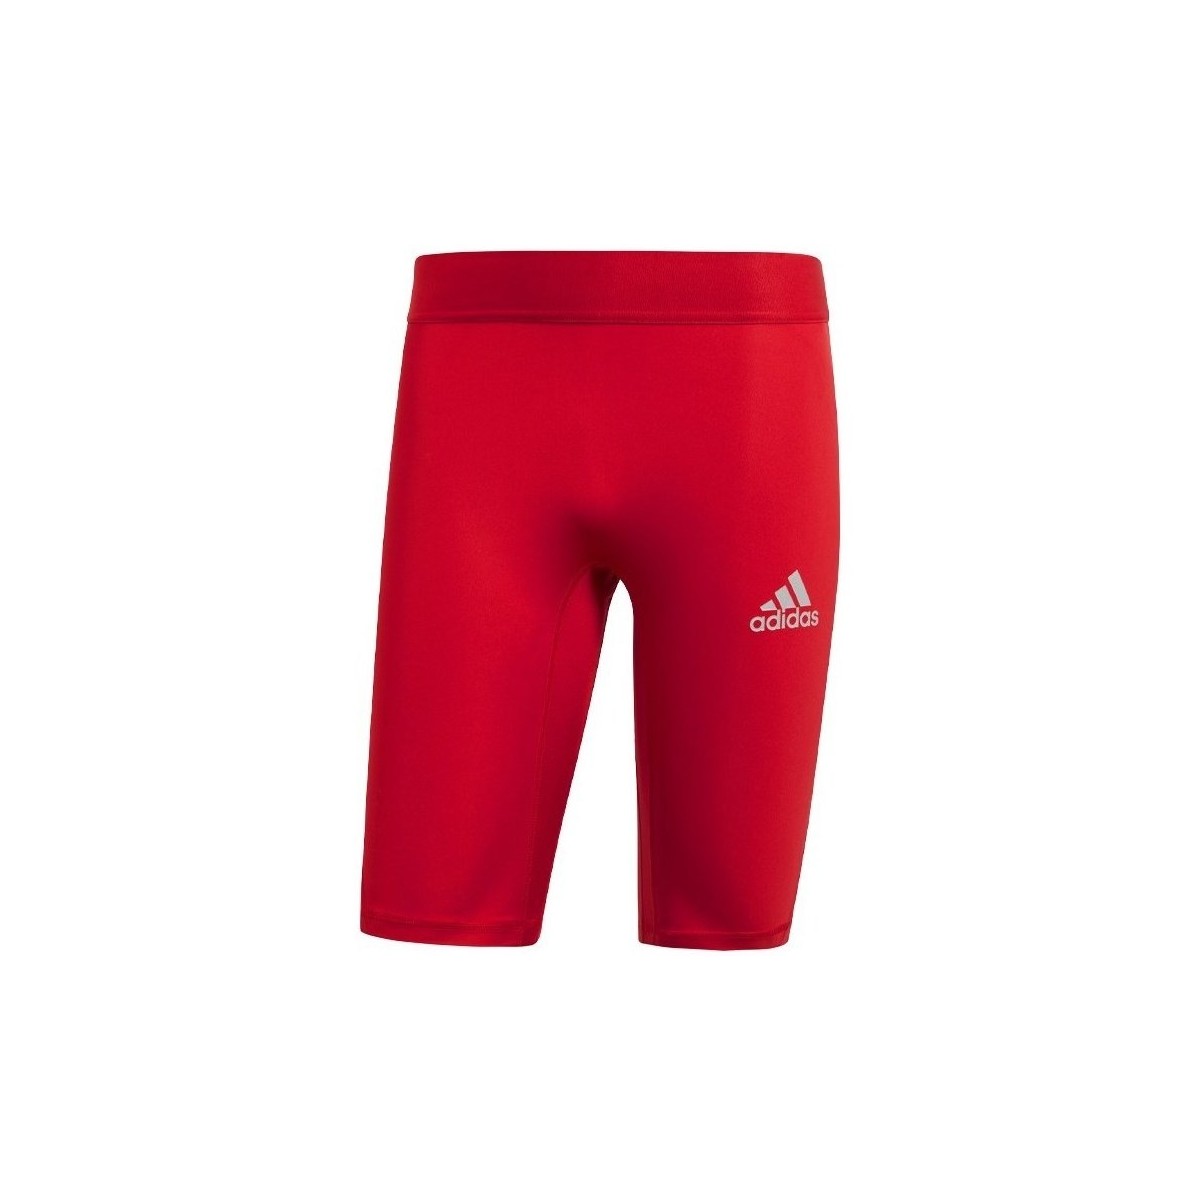 Textil Muži Kalhoty adidas Originals Baselayer Alphaskin Červená